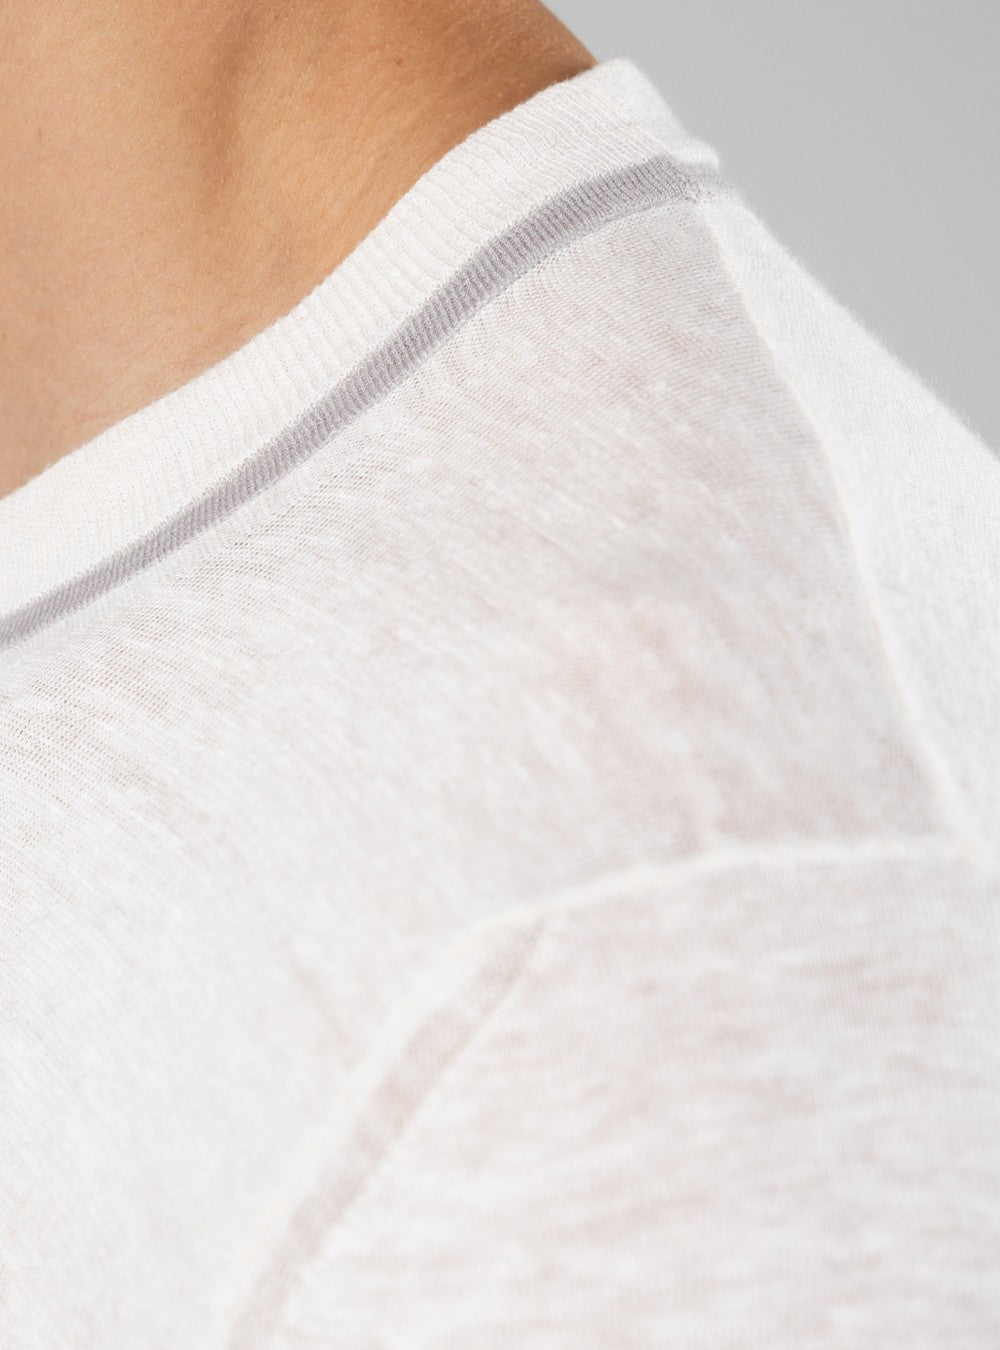 Proteus Lightweight T-Shirt in Cashmere/Linen/Silk, Lichen